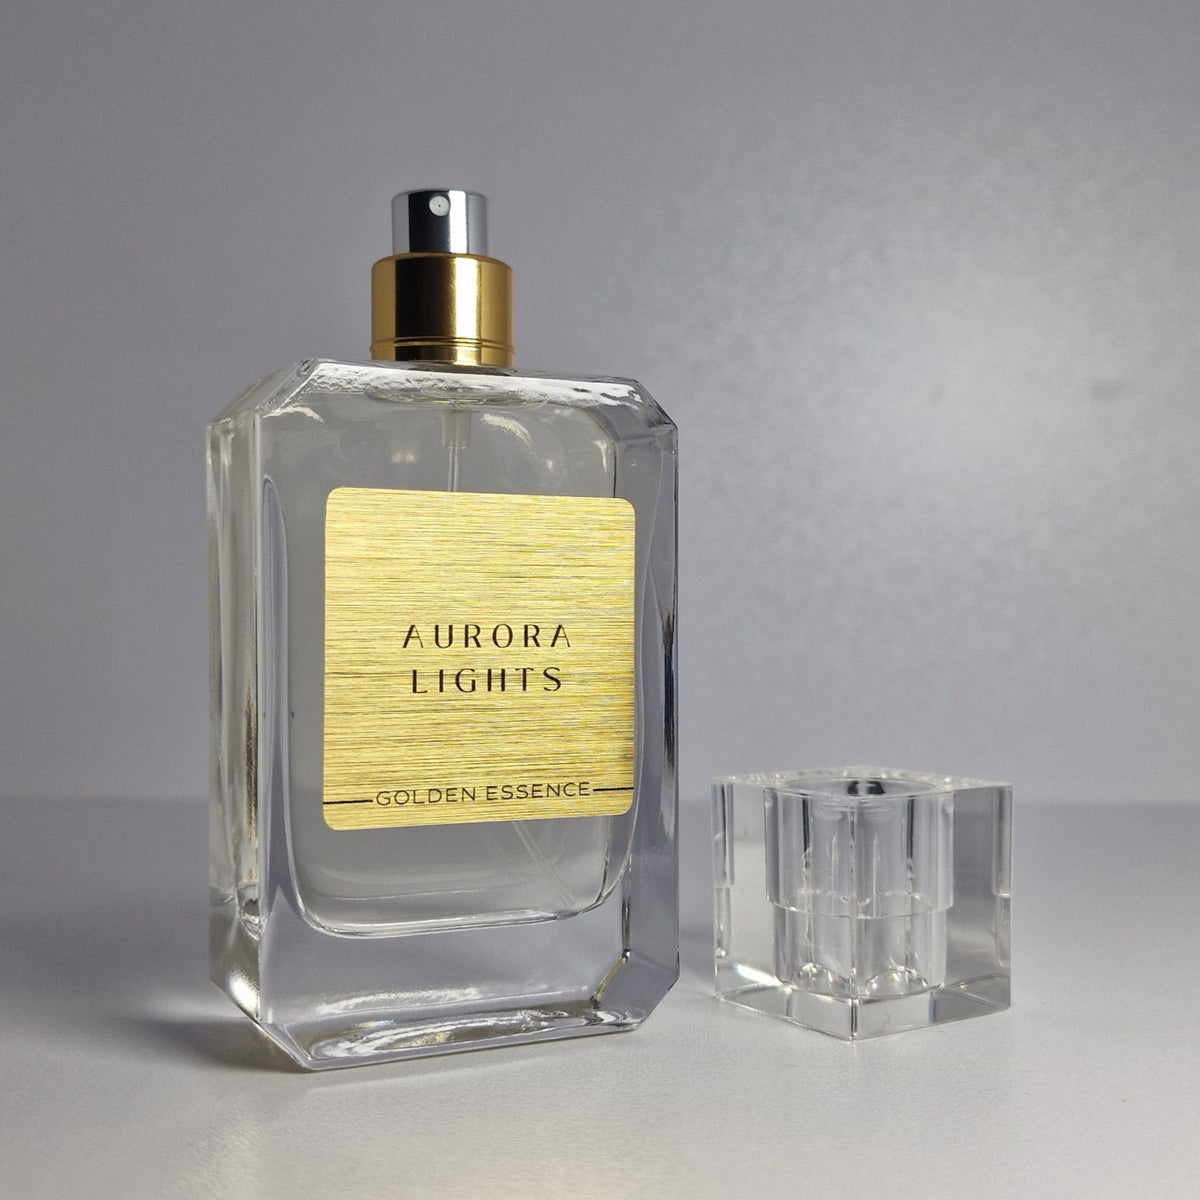 Aurora Lights Fragrance Perfume